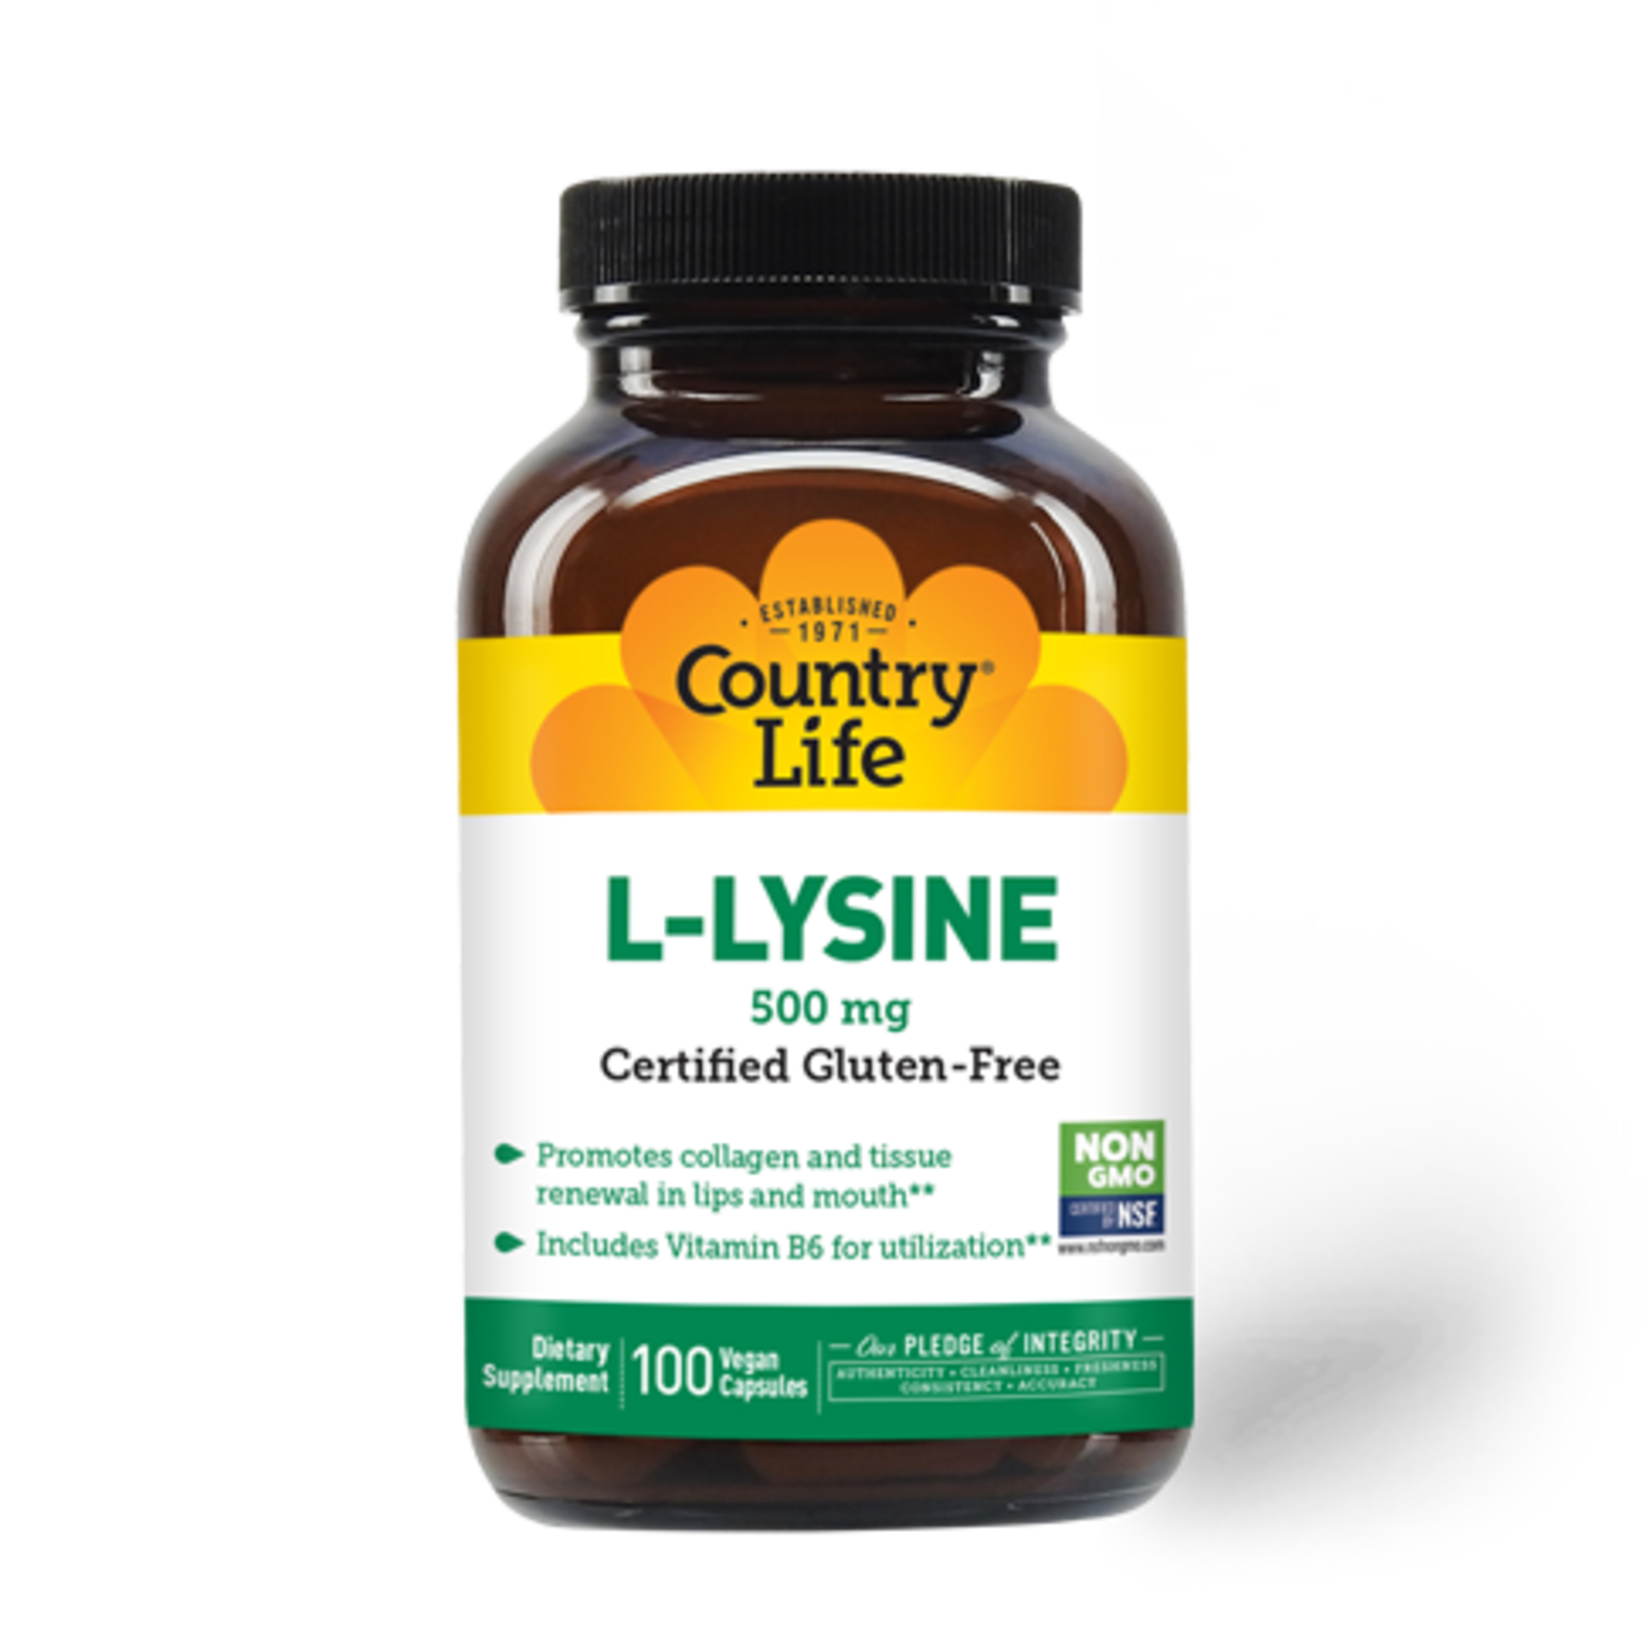 Country Life Country Life - Lysine 500 mg 100 Veg Capsulesapsules - 100 Capsules